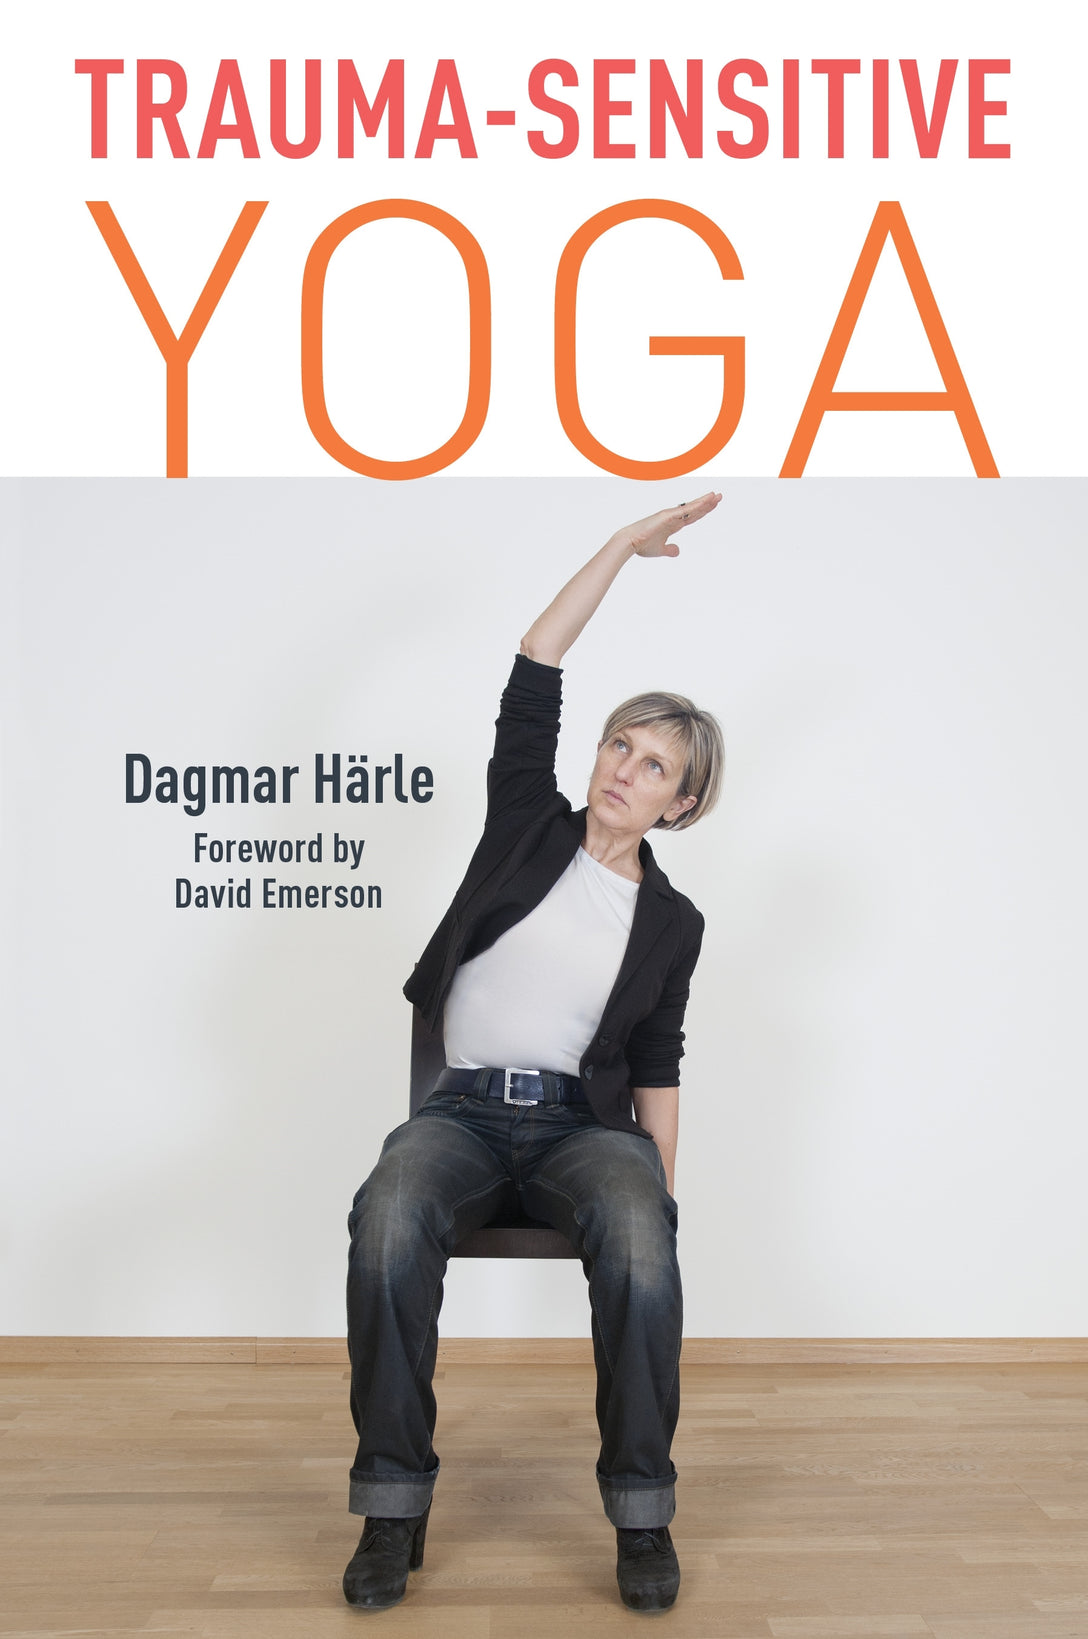 Trauma-Sensitive Yoga by Dagmar Härle, David Emerson